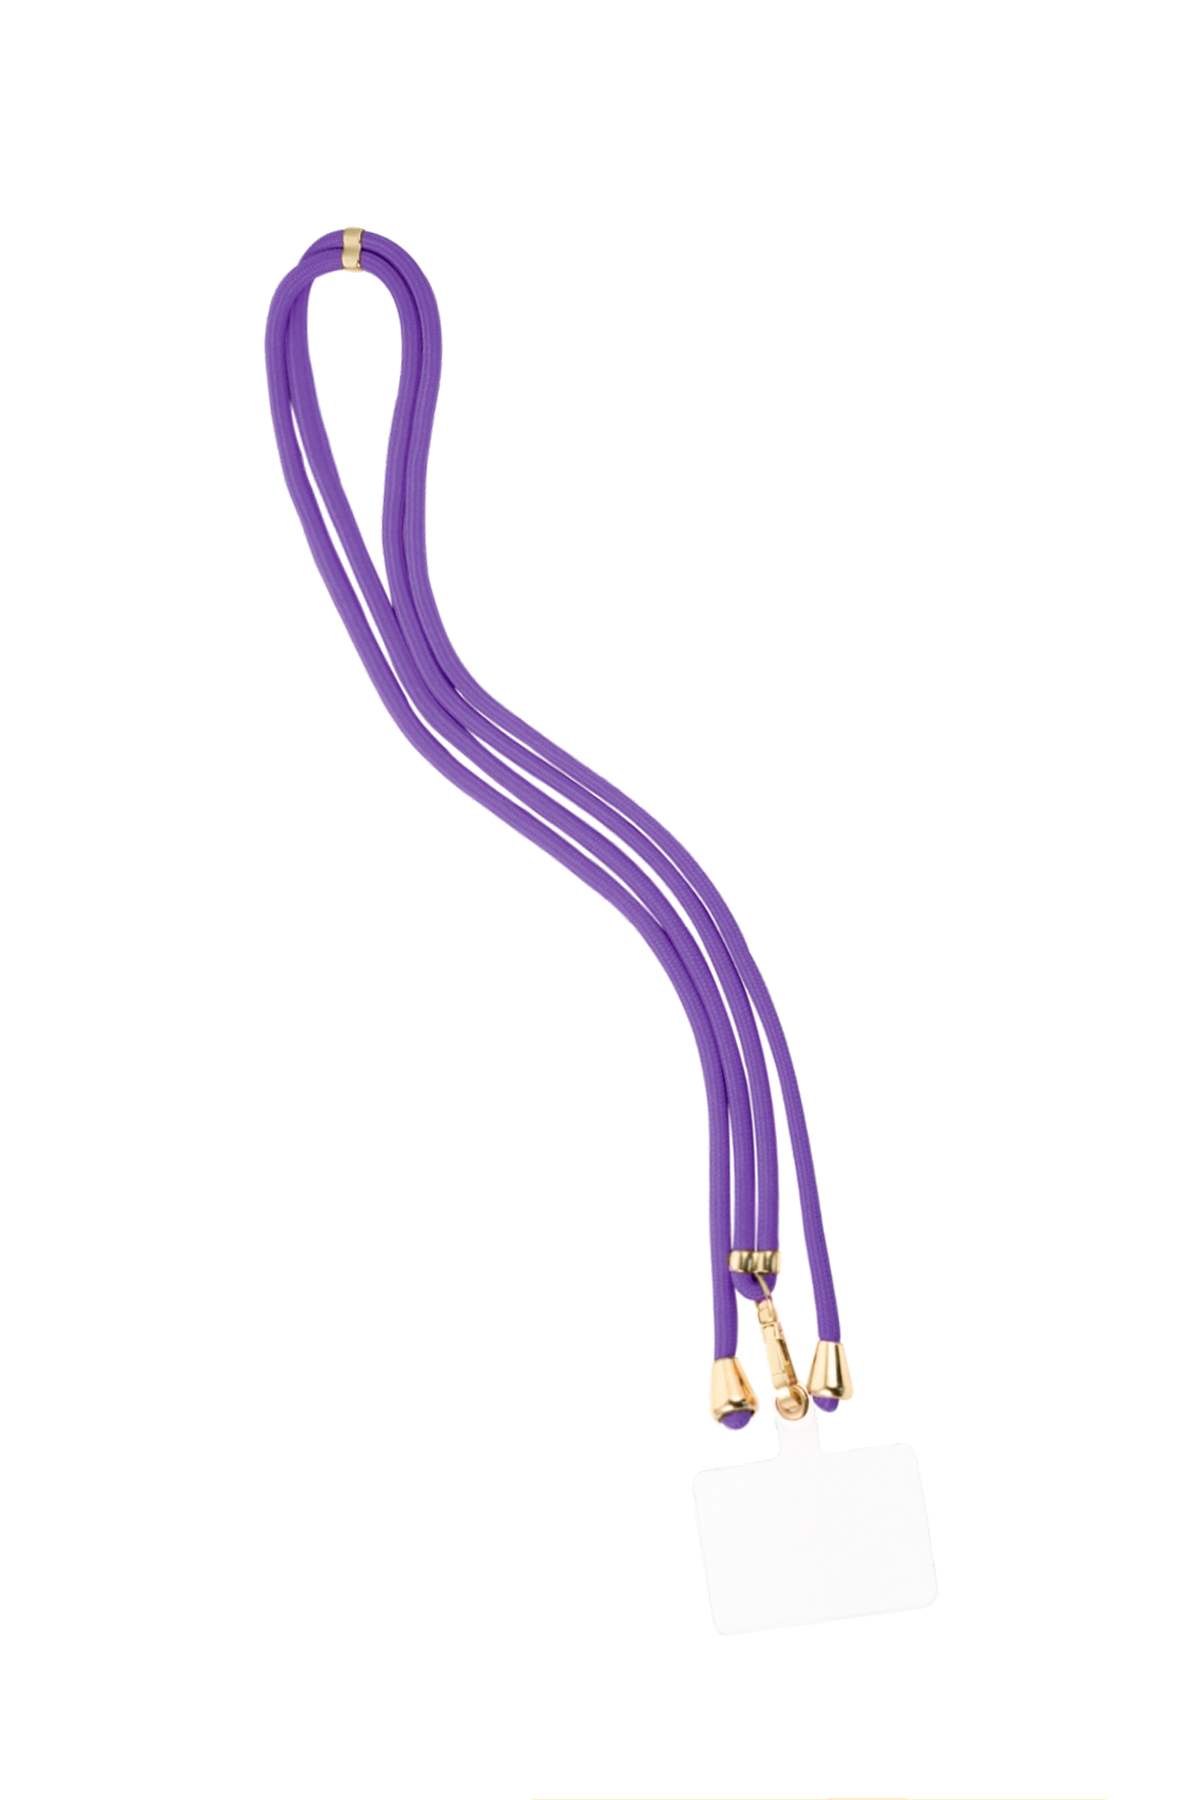 Telephone cord subtle print - purple h5 